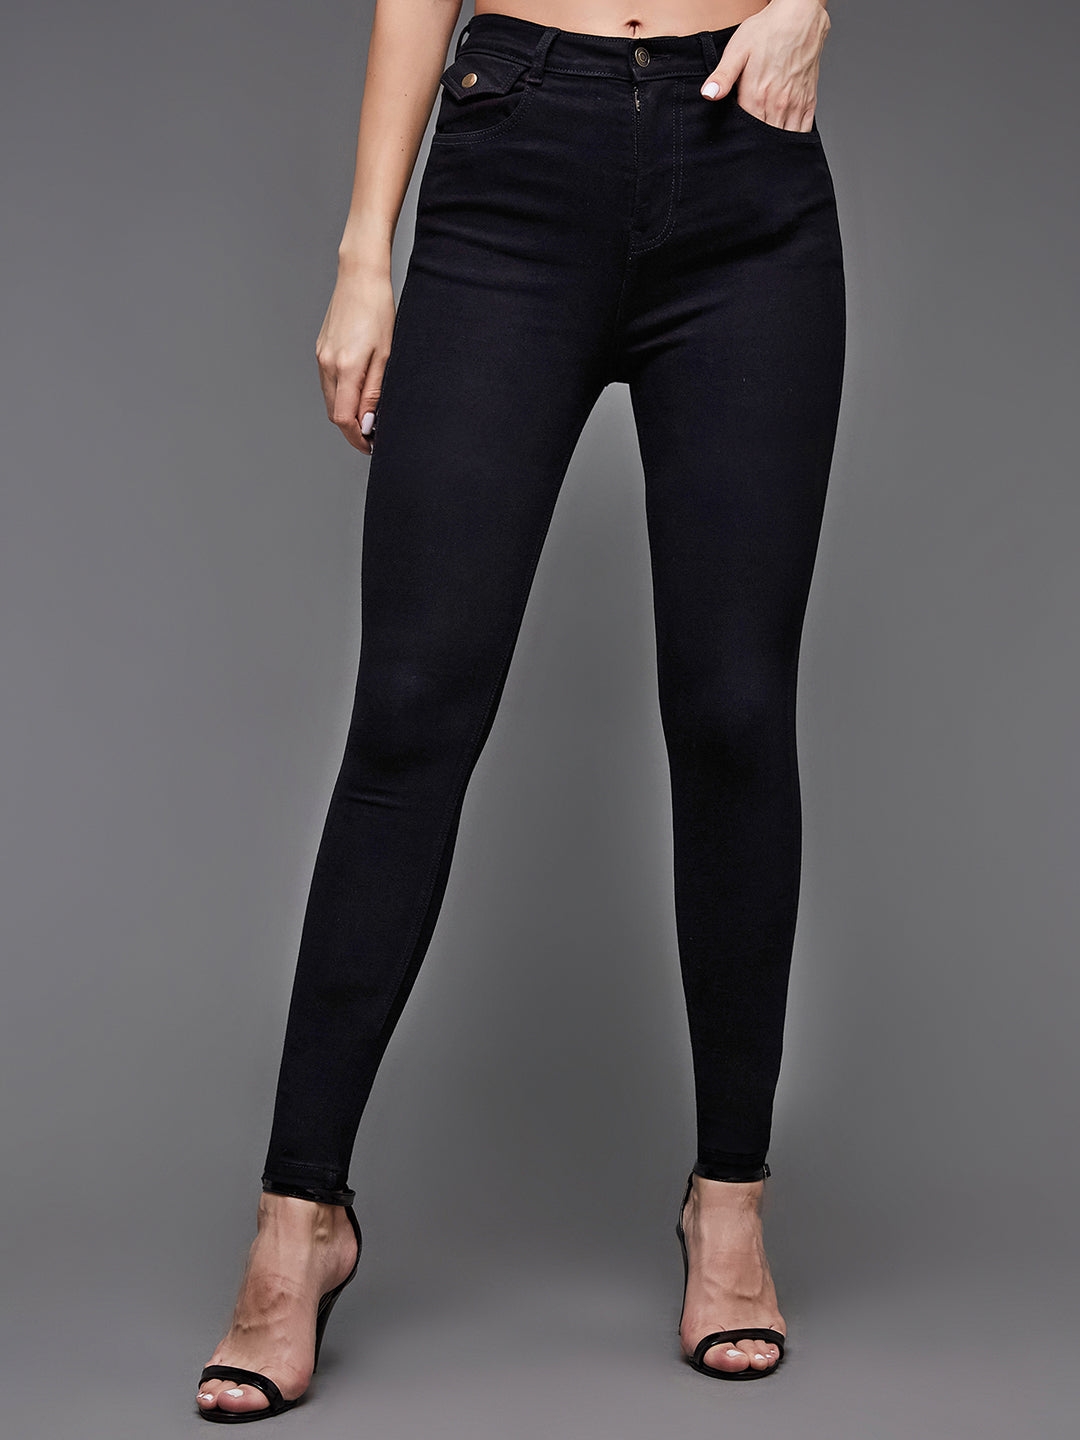 Black Skinny High Rise Clean Look Regular-Length Stretchable Denim Jeans